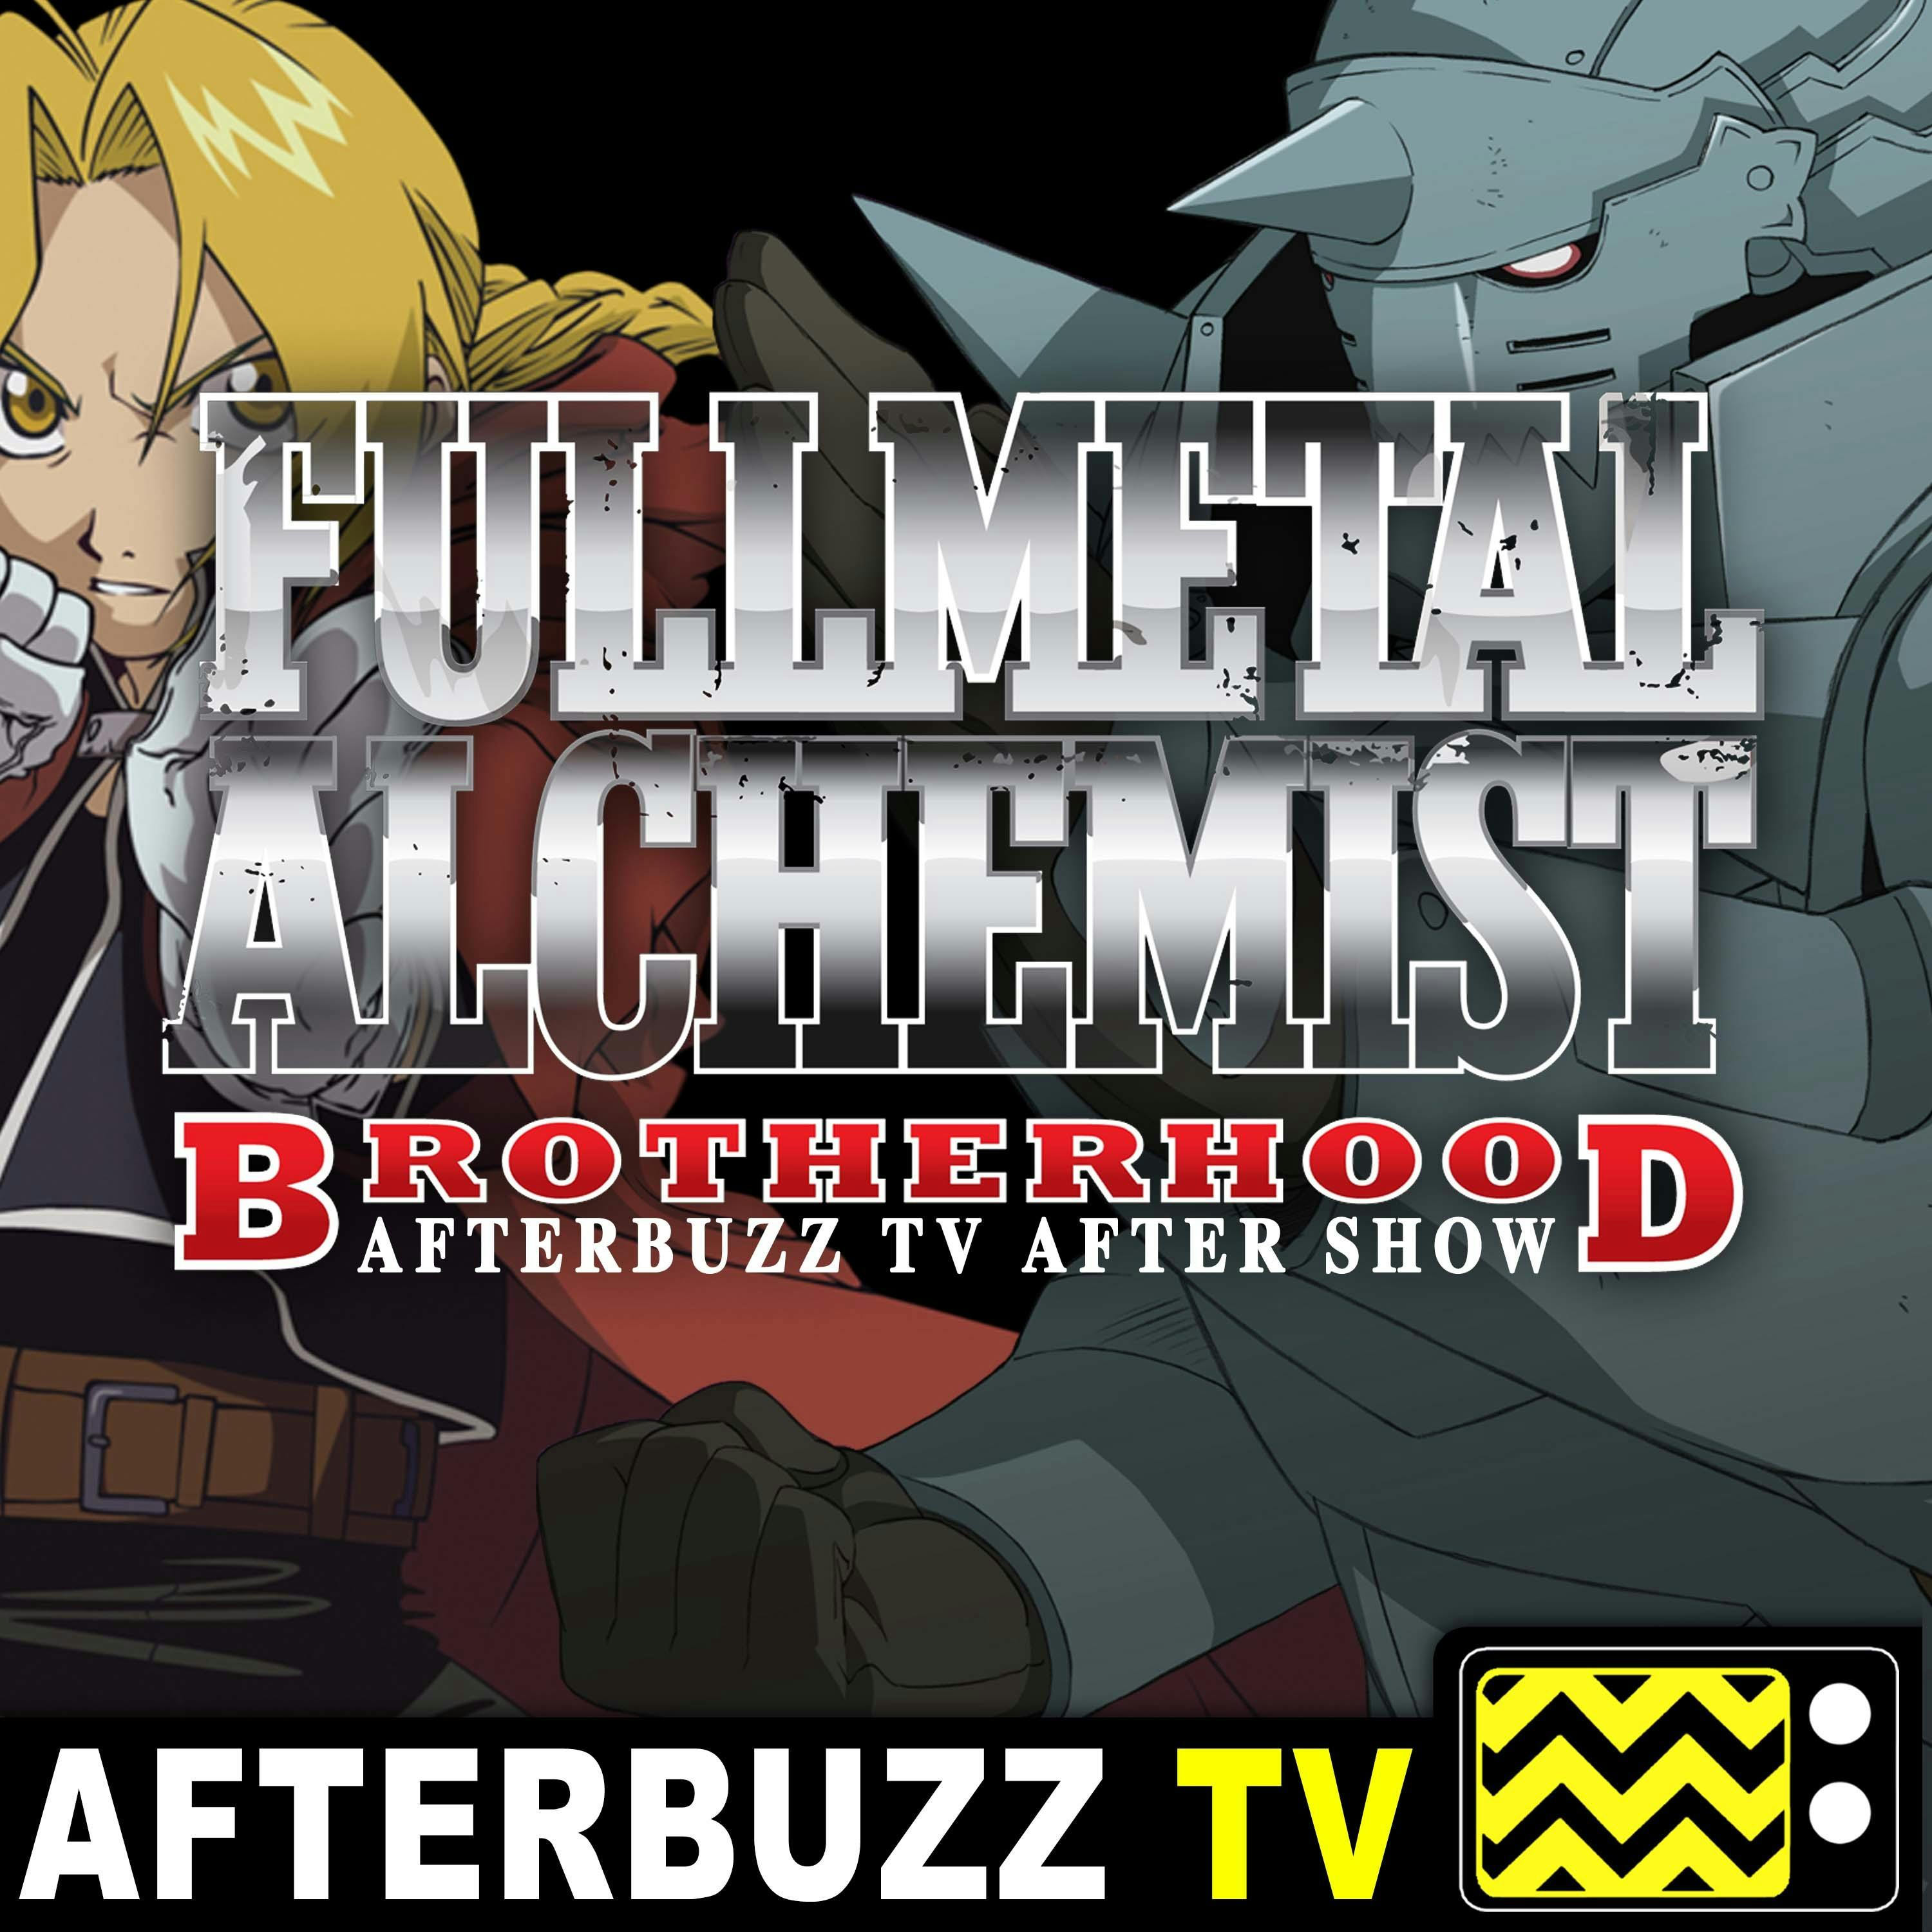 Fullmetal Alchemist: Brotherhood S:1 | Episodes 5 – 8 | AfterBuzz TV AfterShow